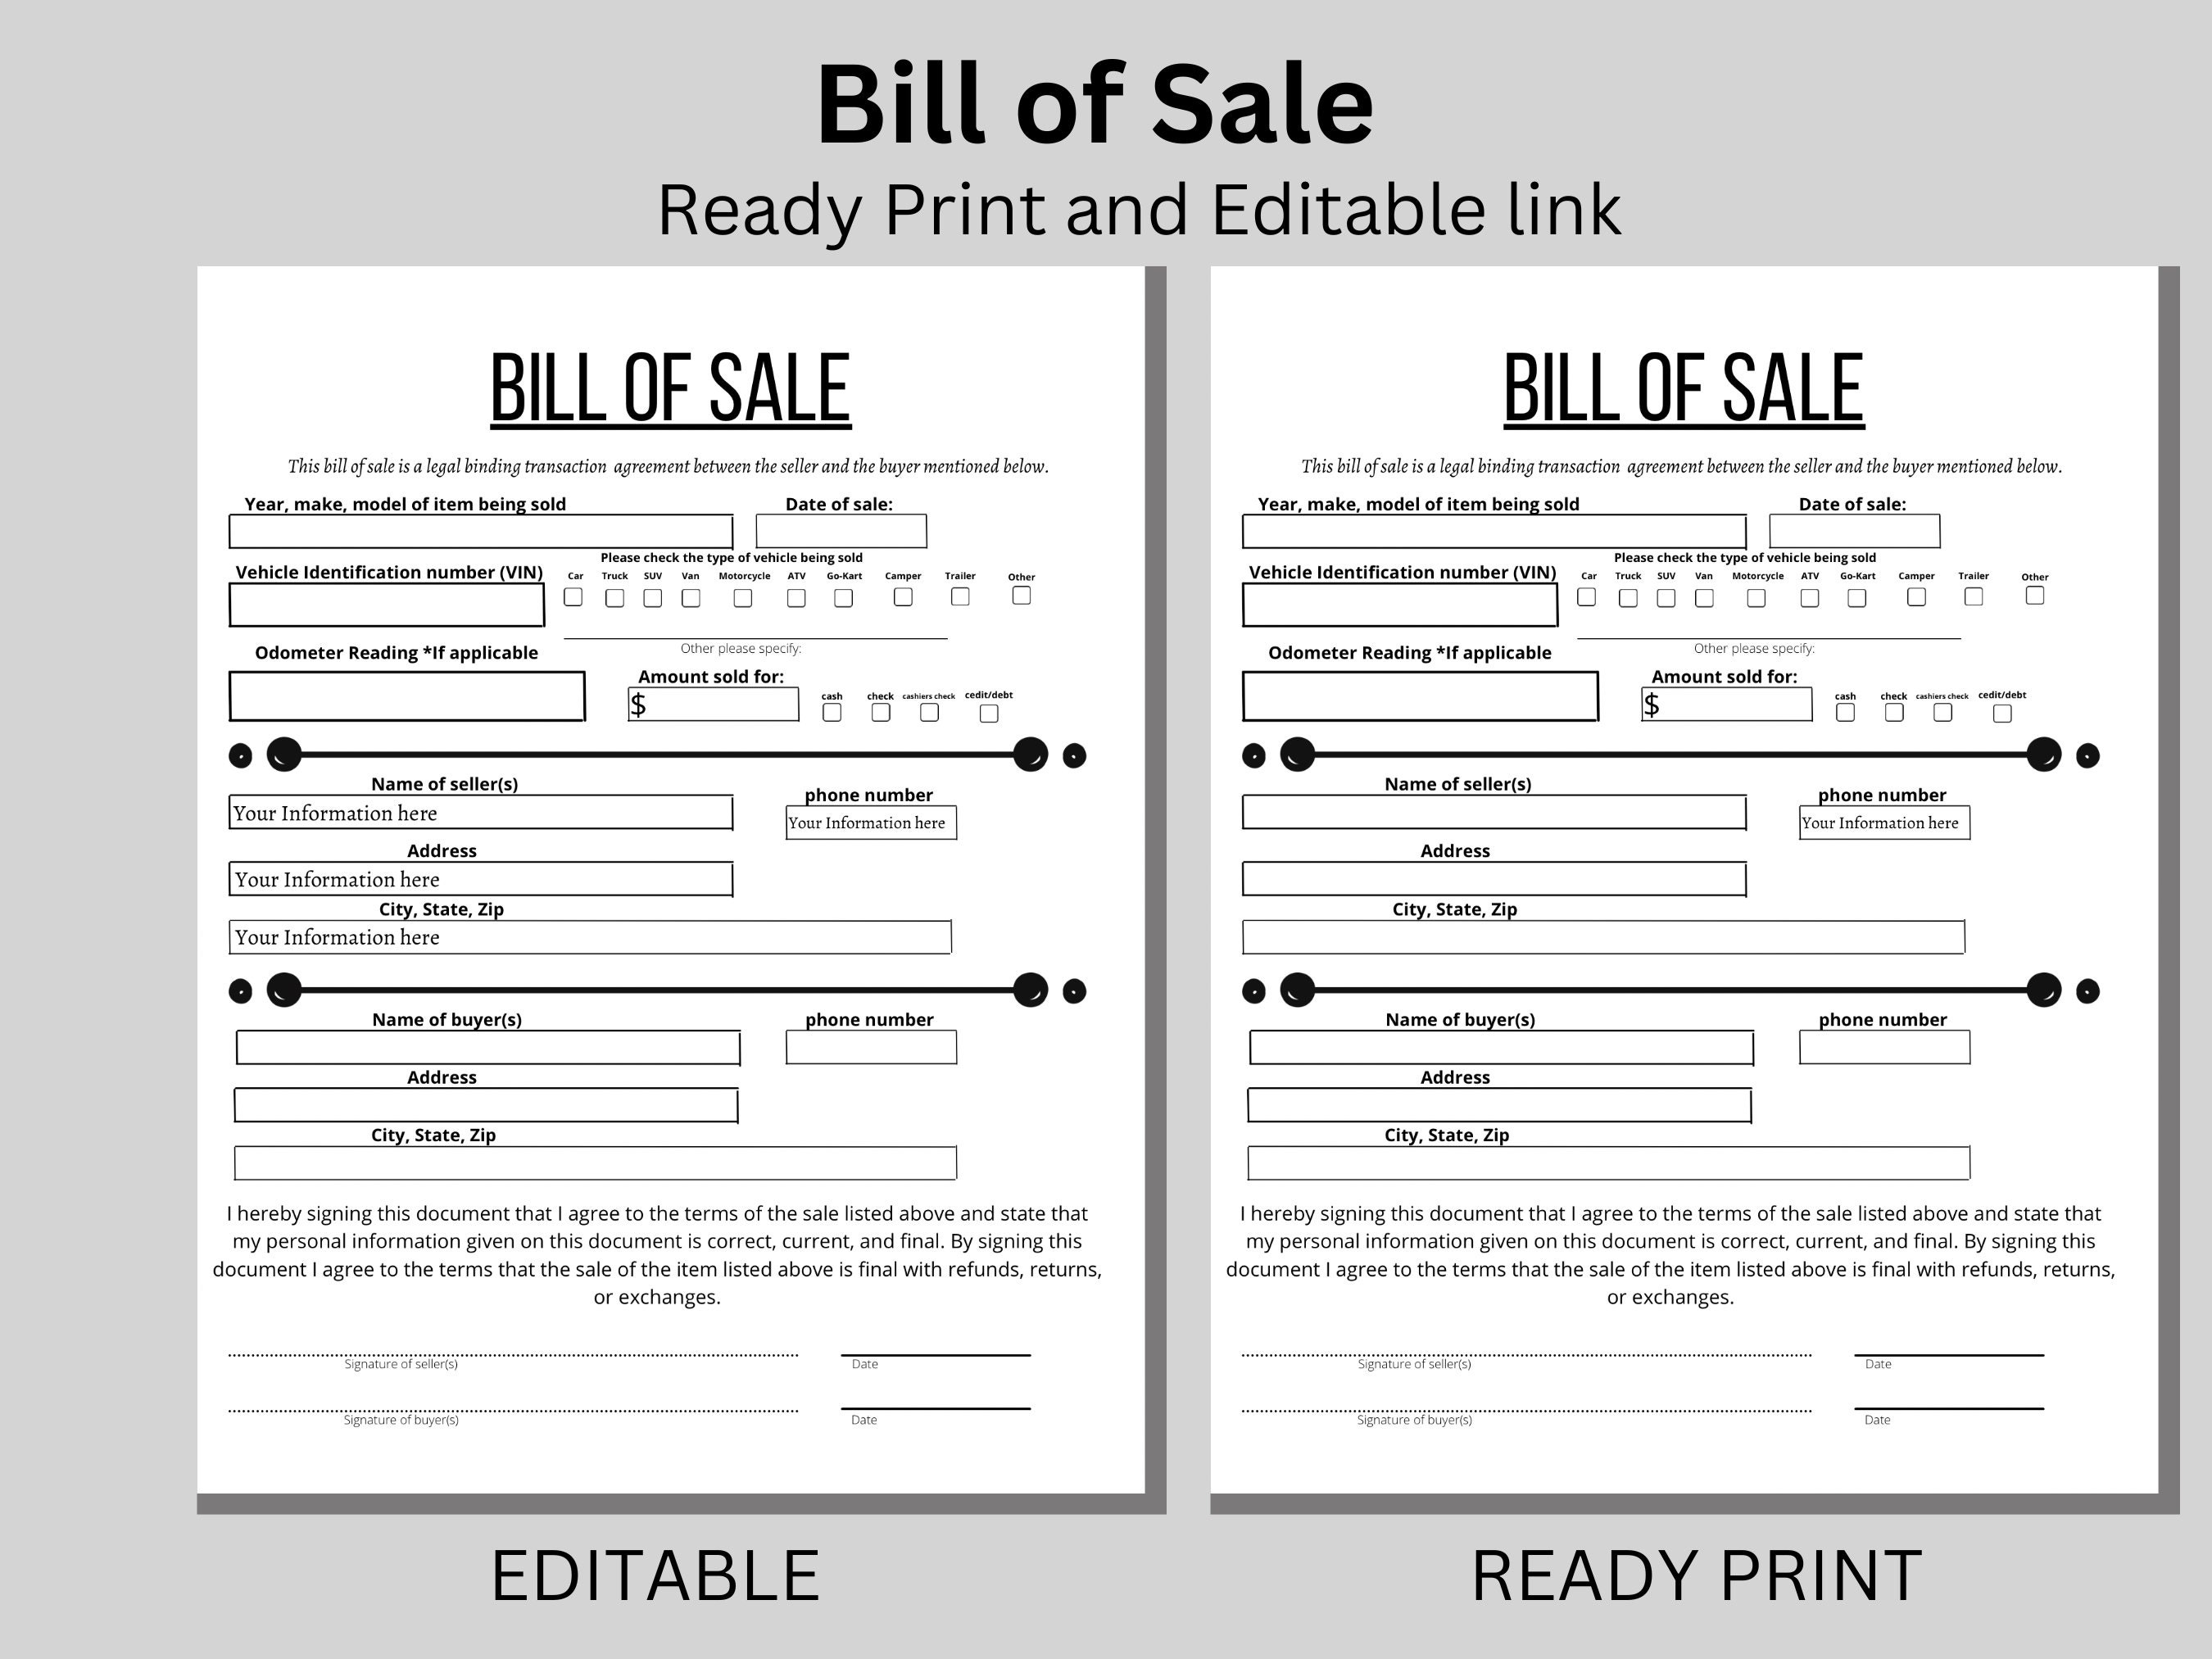 Free Louisiana RV Bill of Sale Form Template - Download in Word, Google  Docs, PDF